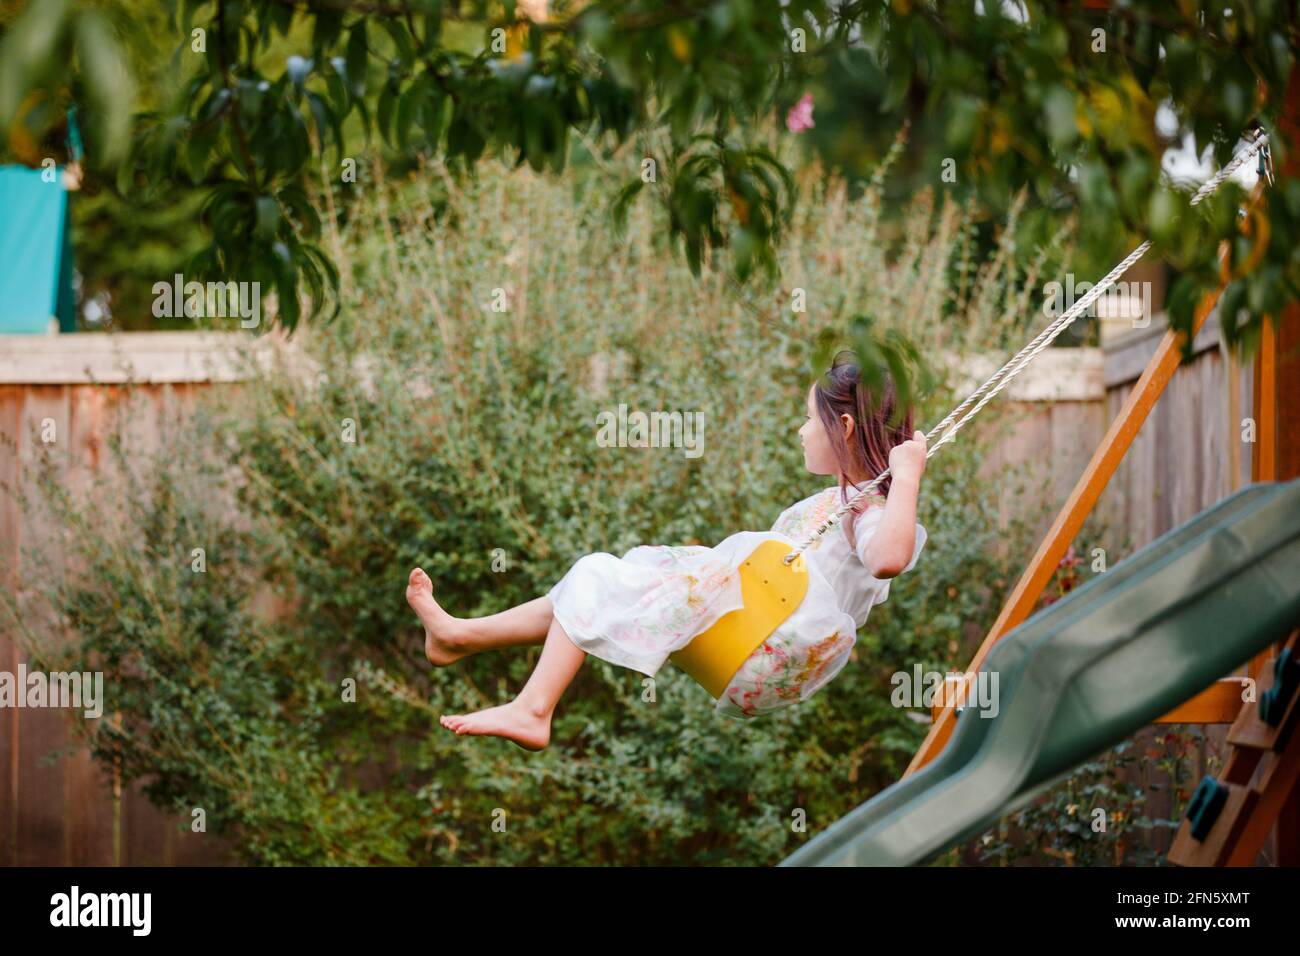 Una ragazza felice a piedi nudi oscilla su un playlet sotto a. albero in estate Foto Stock